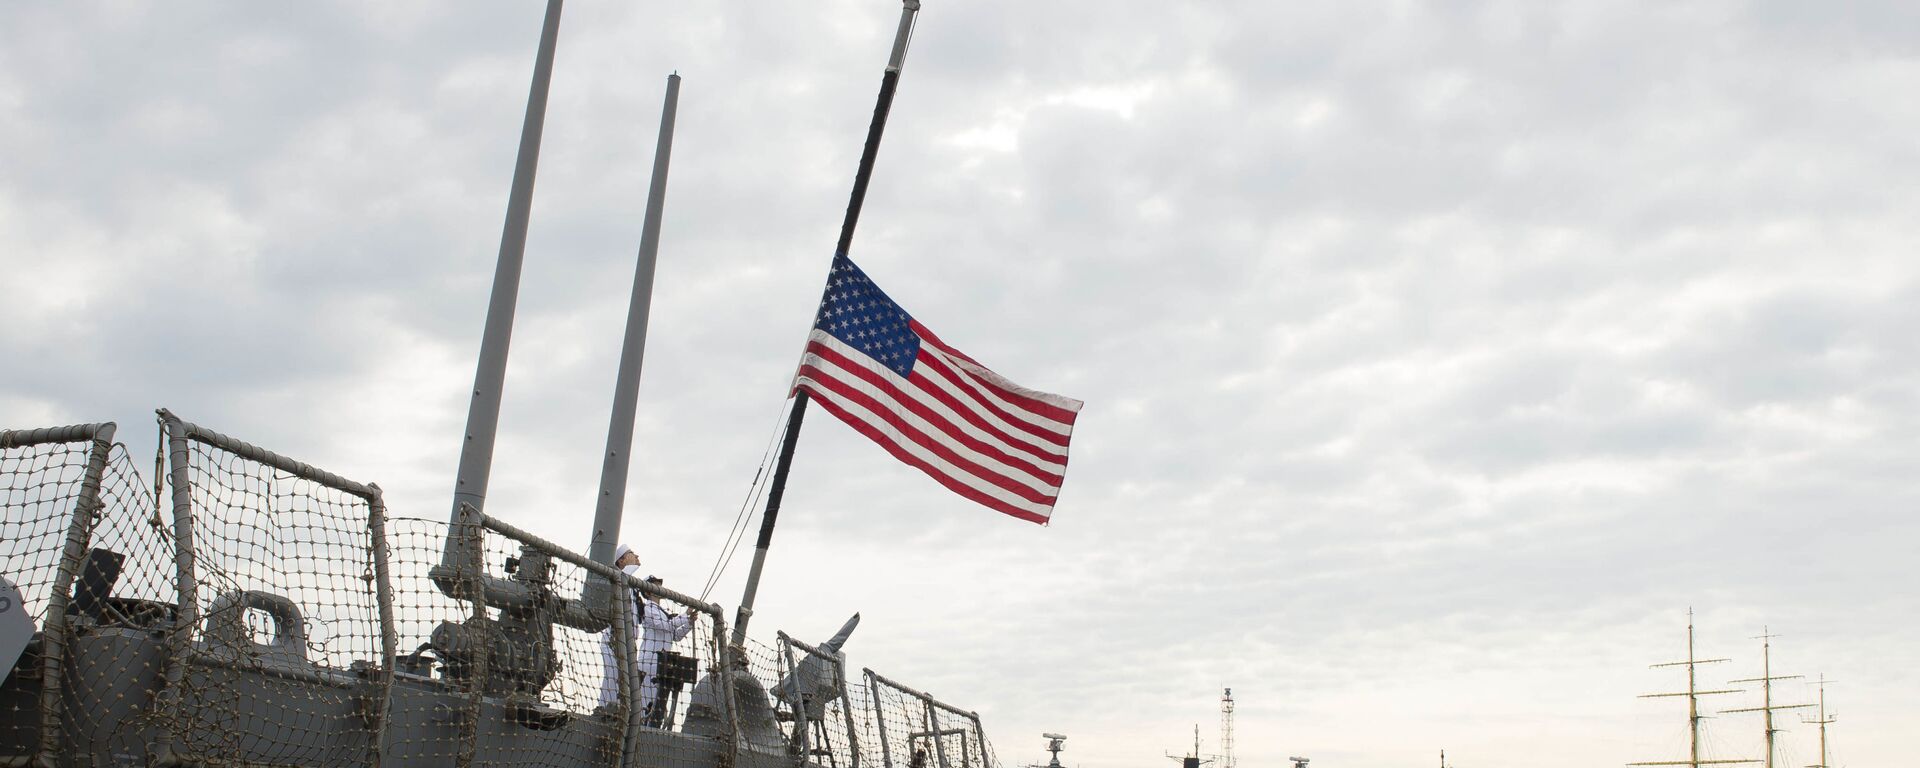 Моряки поднимают флаг на эсминце ВМС США Портер - Sputnik Латвия, 1920, 11.11.2021